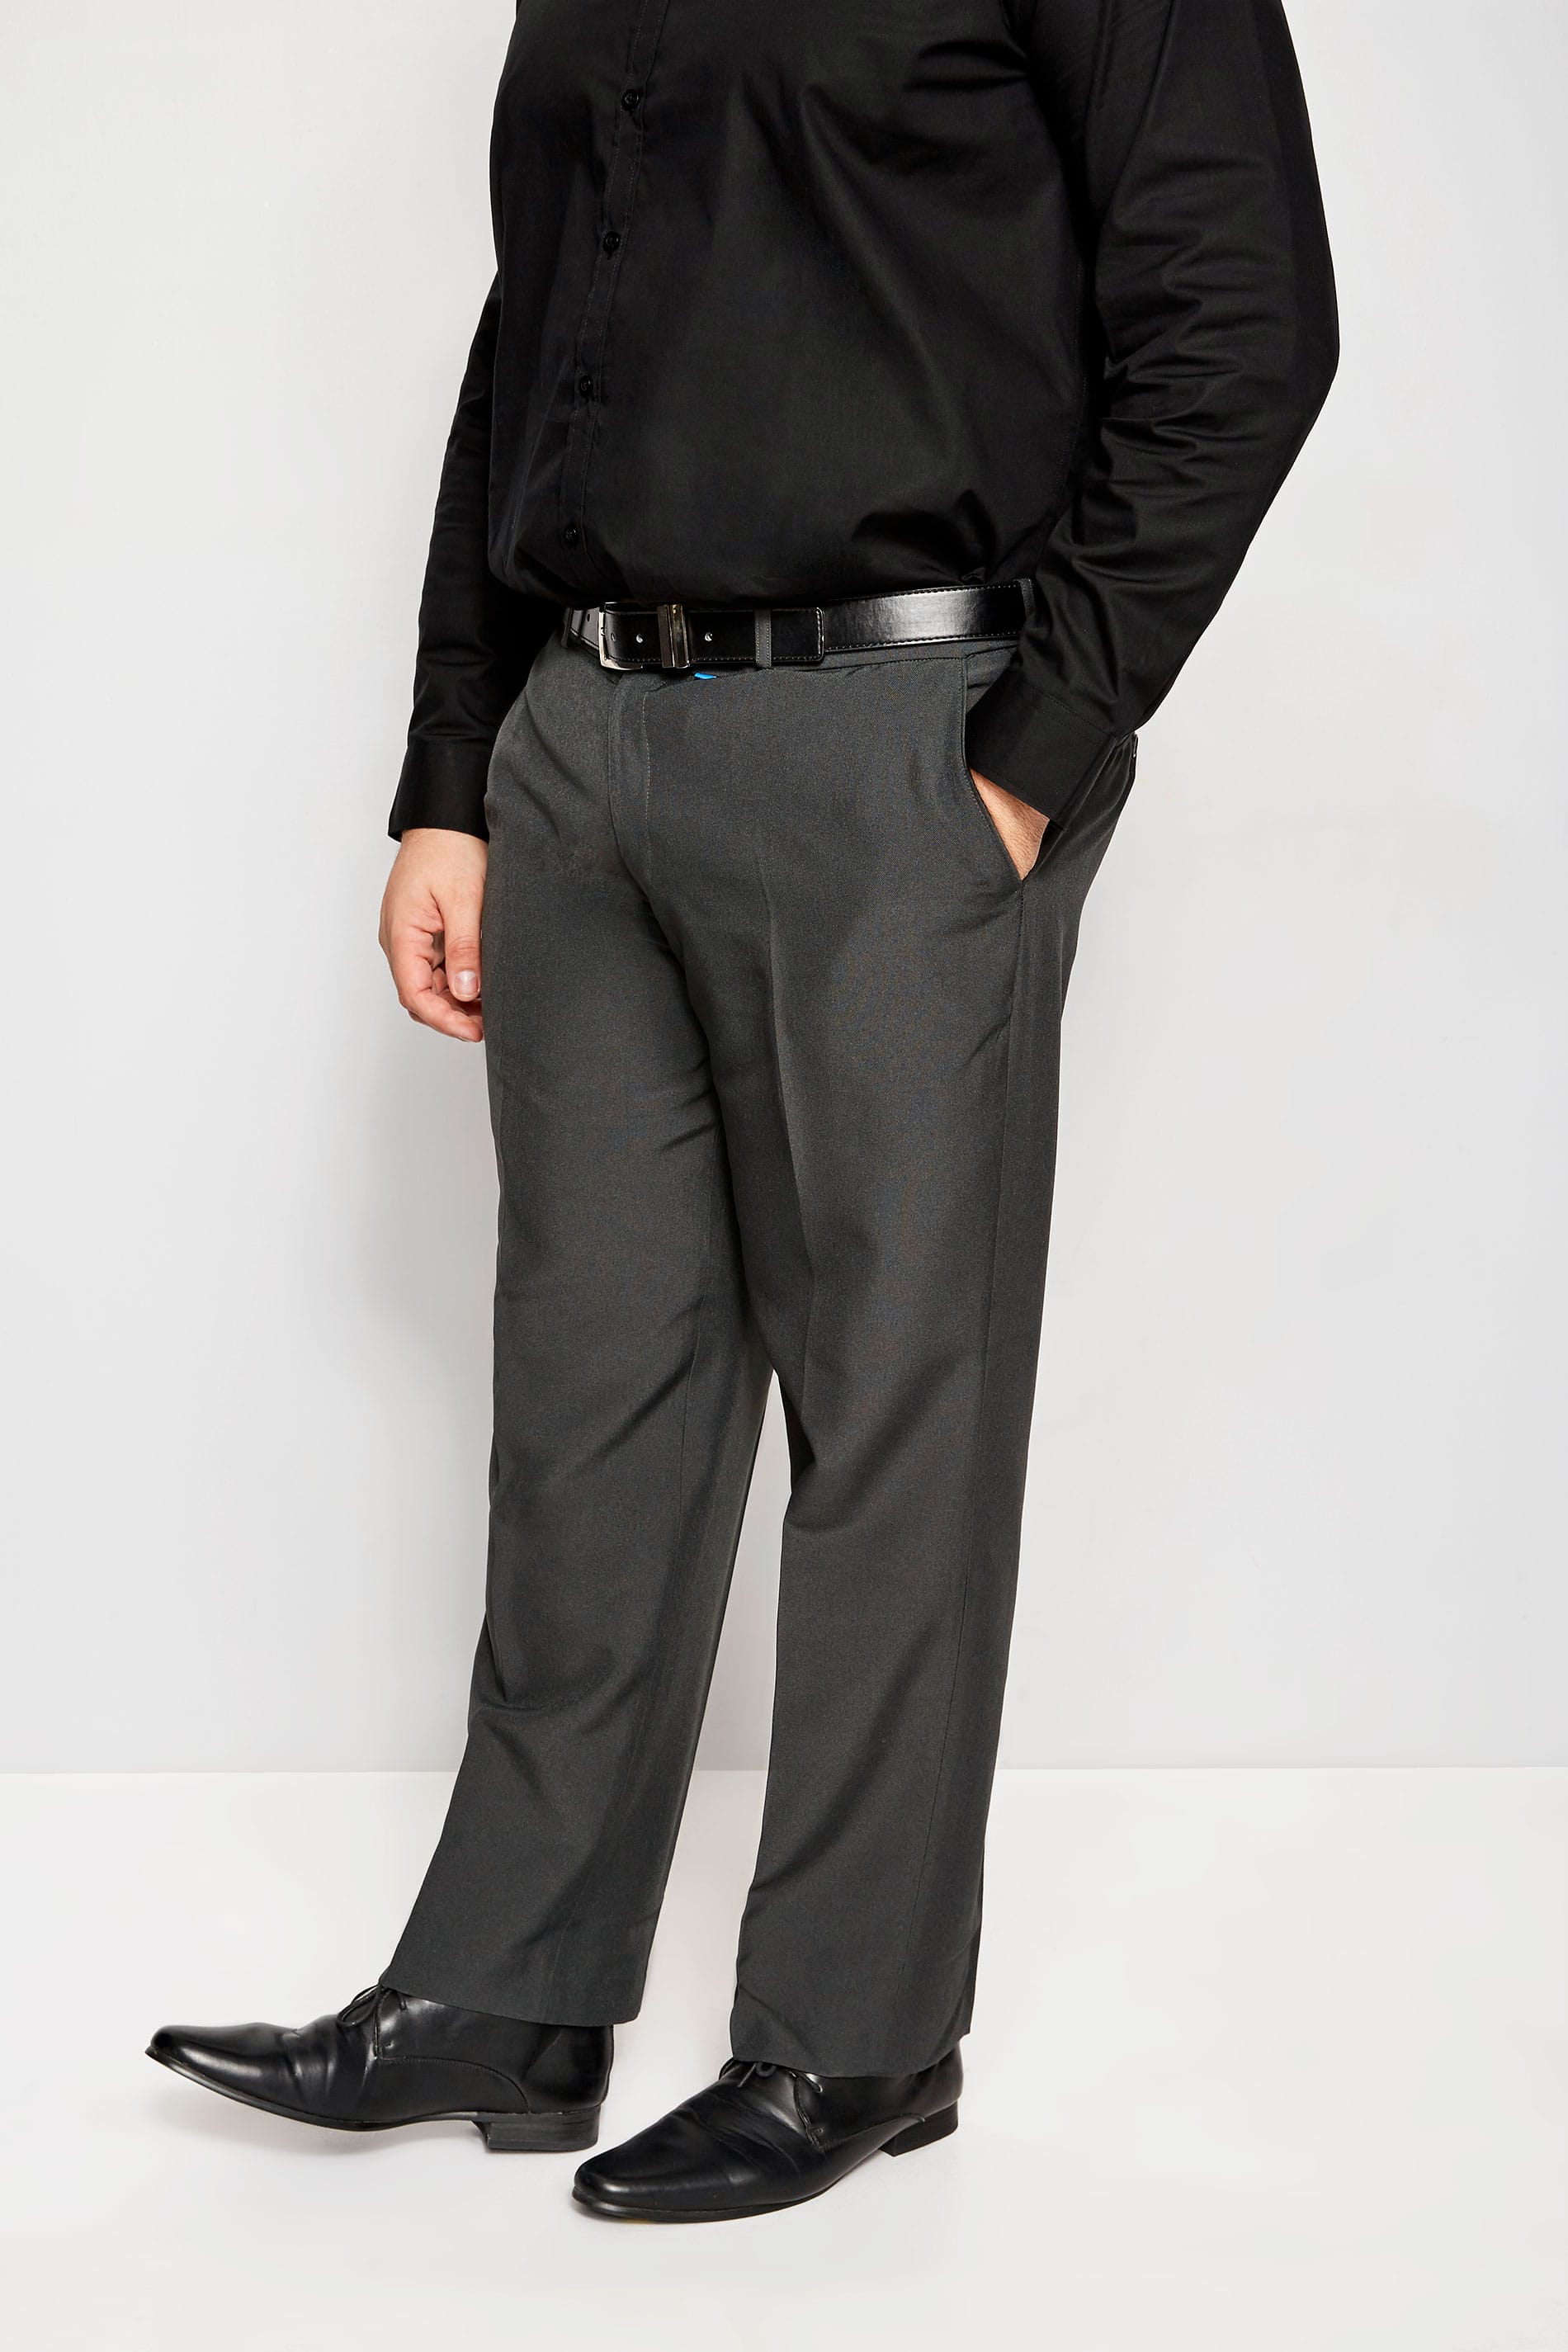 BadRhino Big & Tall Grey Single Pleat Smart Trousers 1